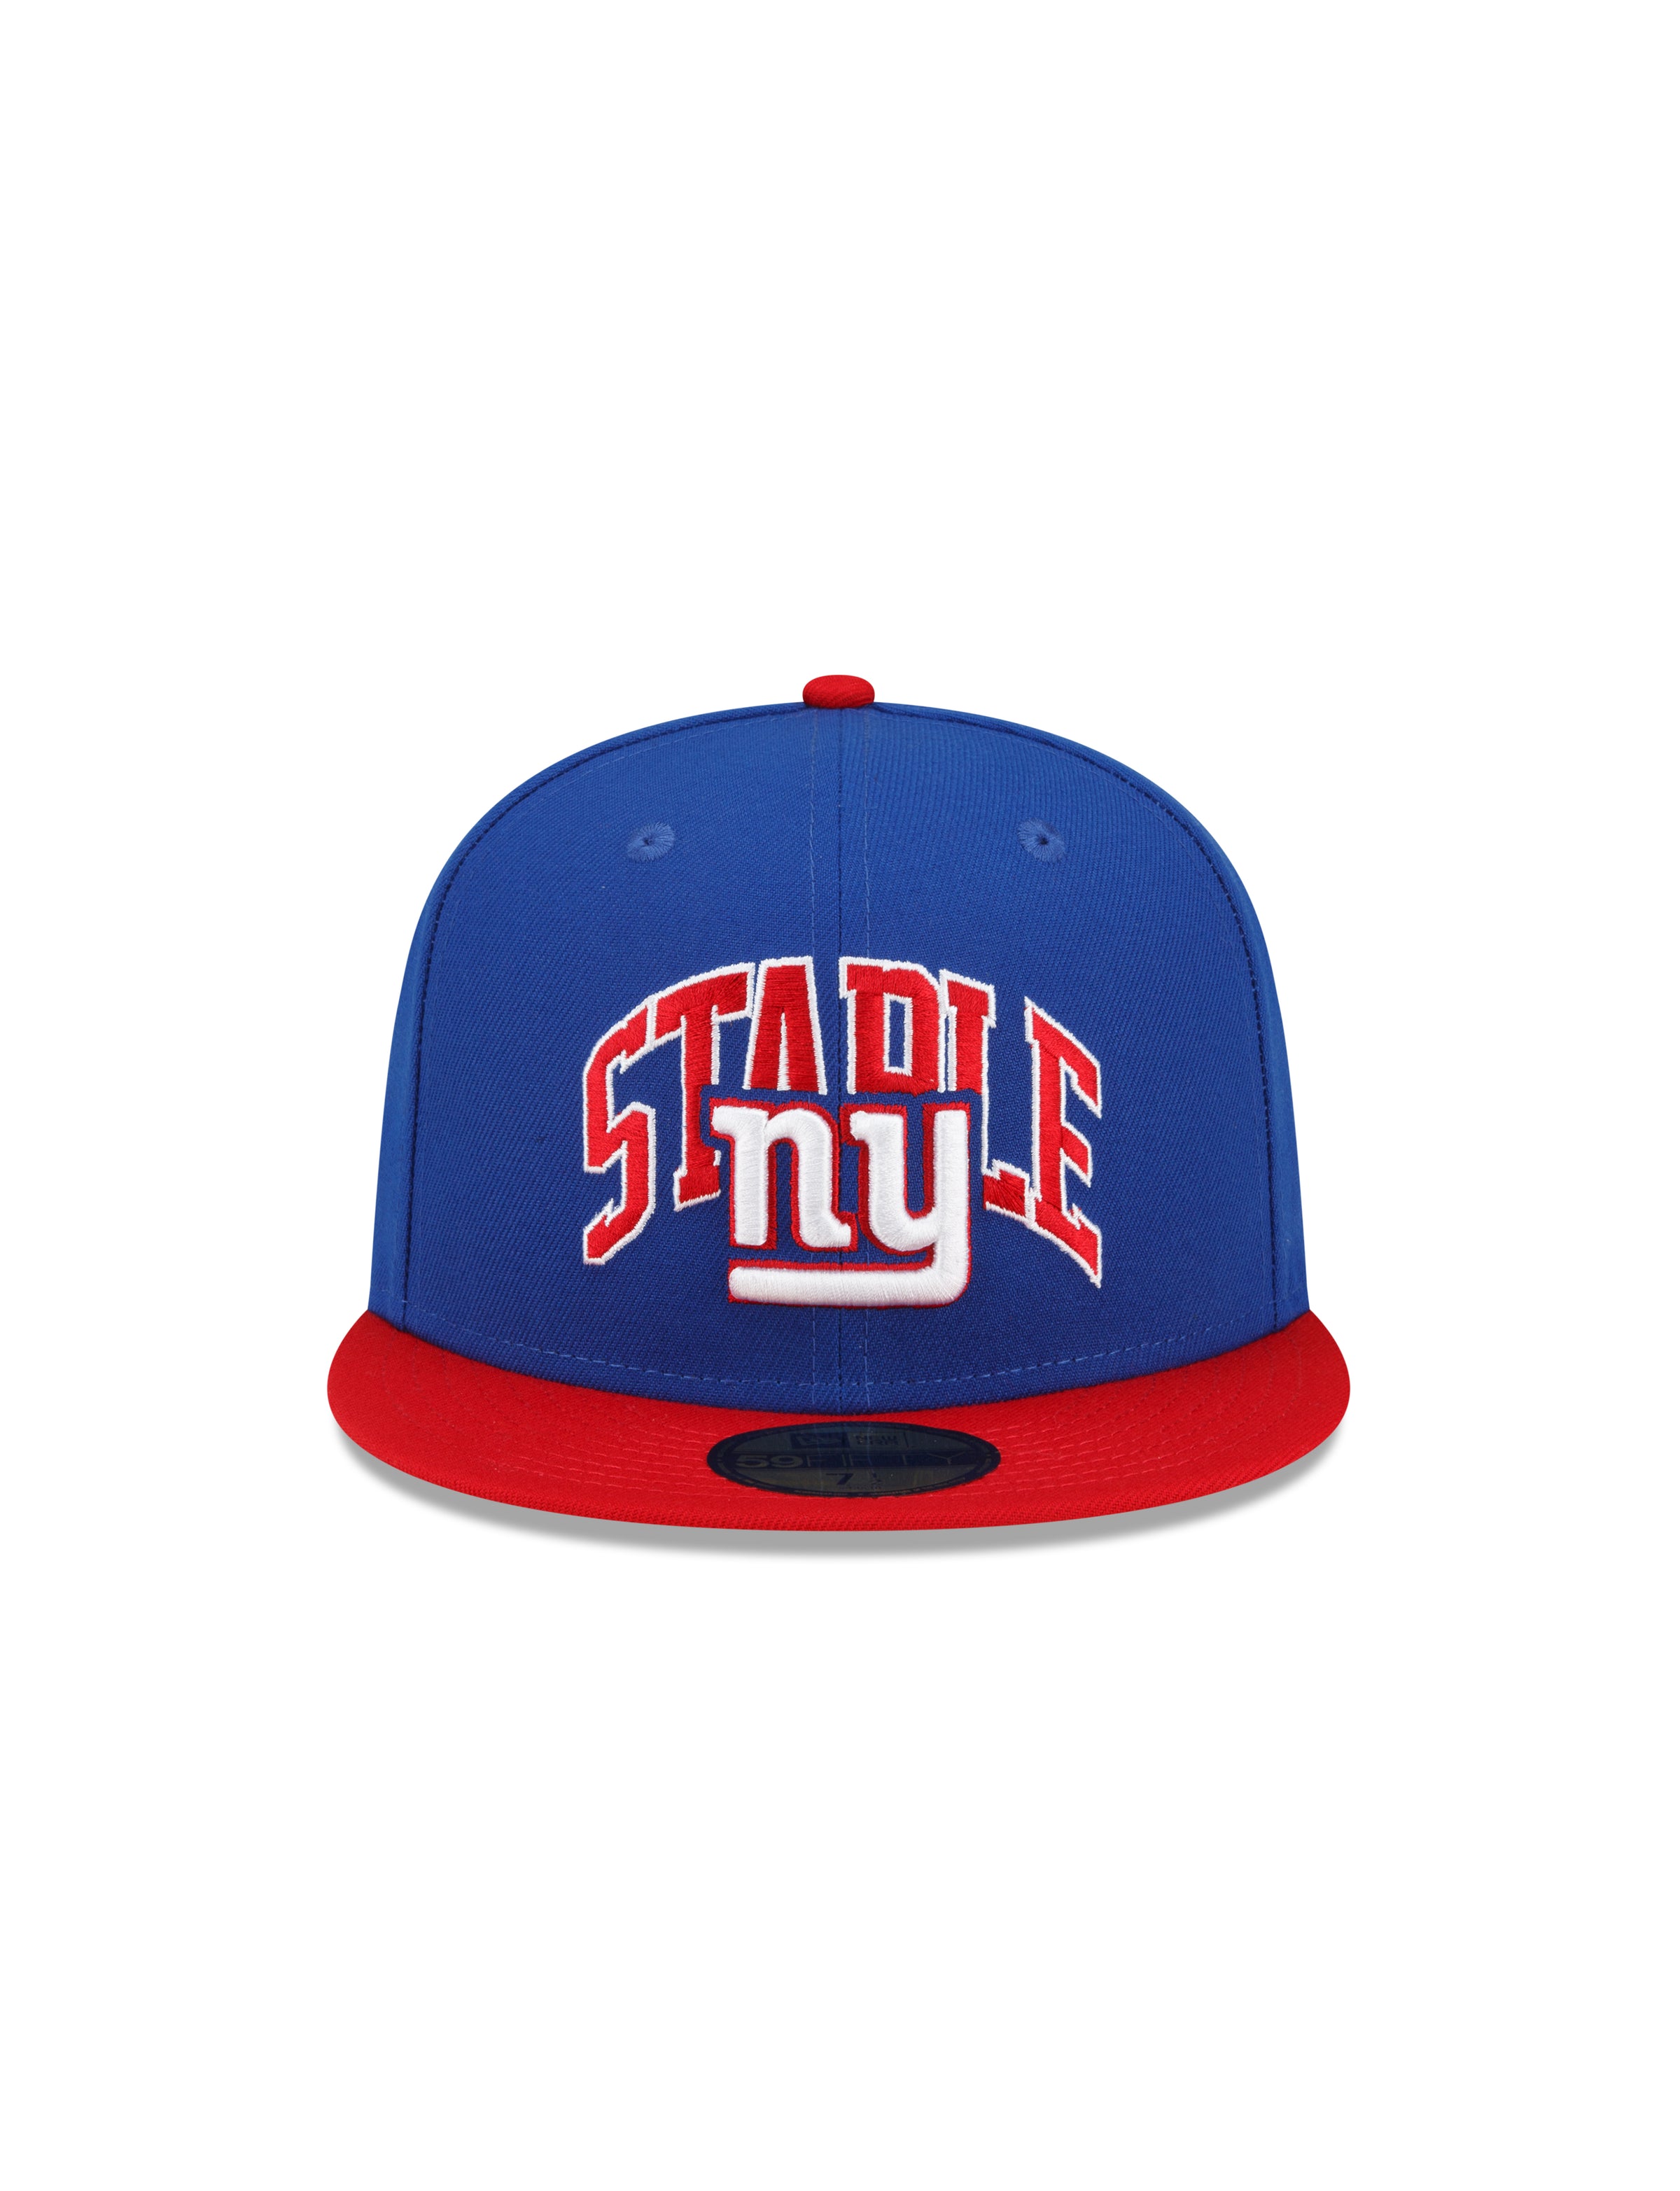 new era nfl logo hat